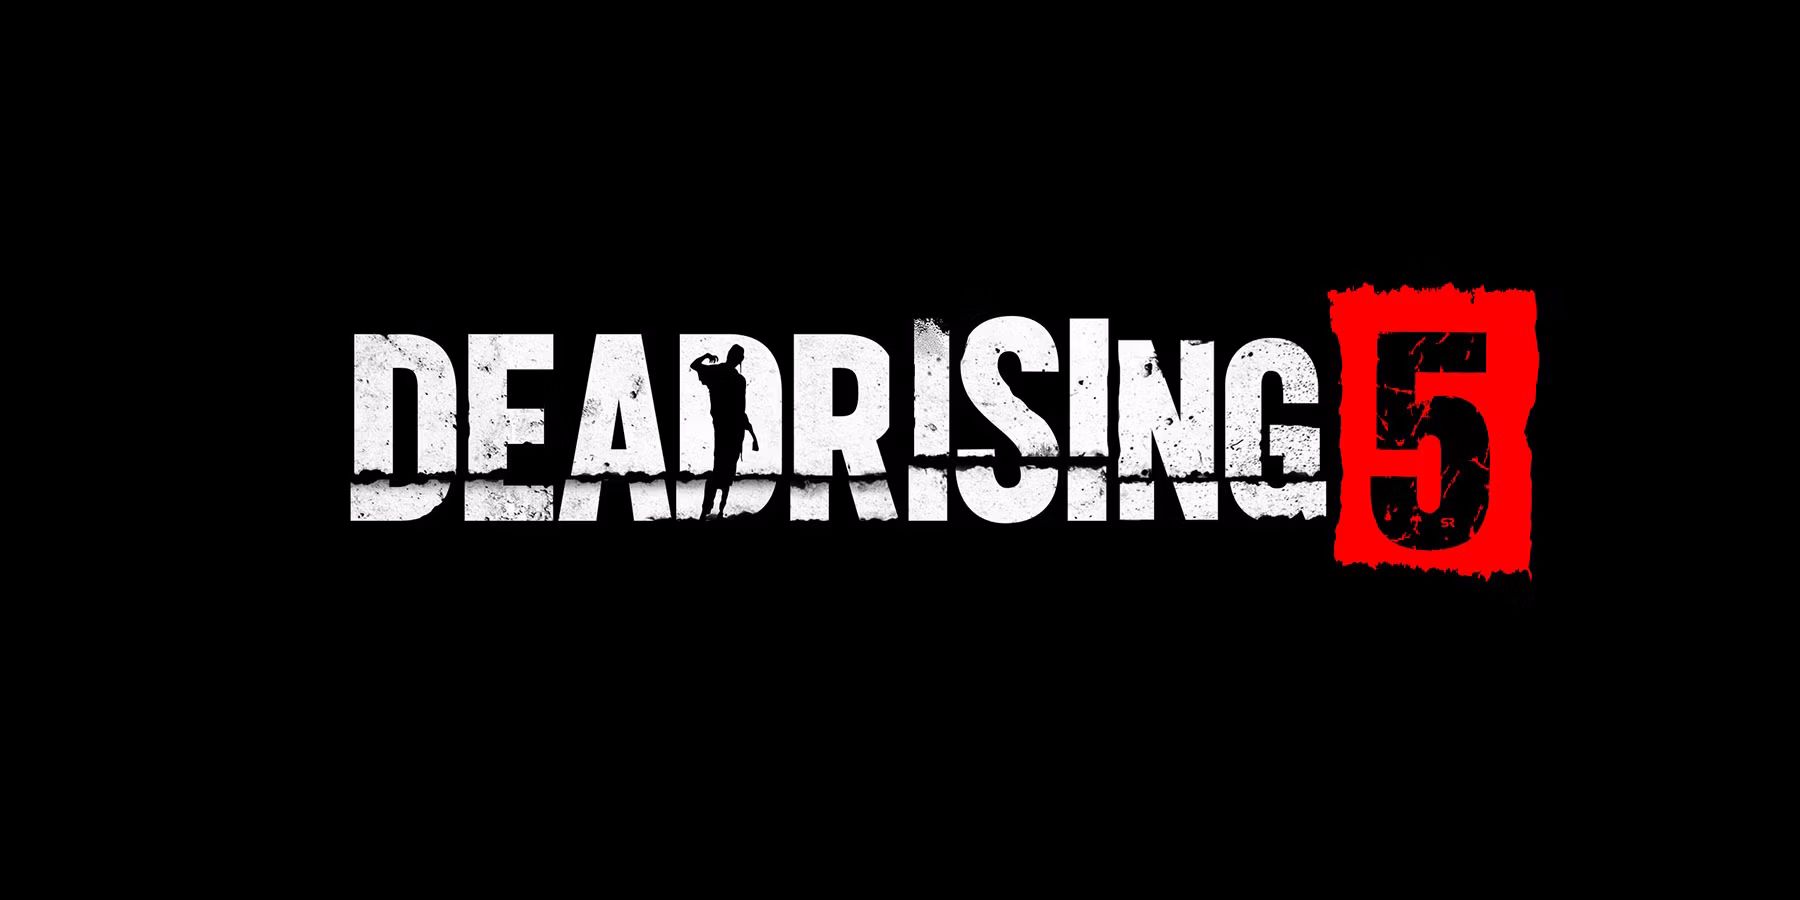 Dead Rising 5 Gameplay Leaks Online